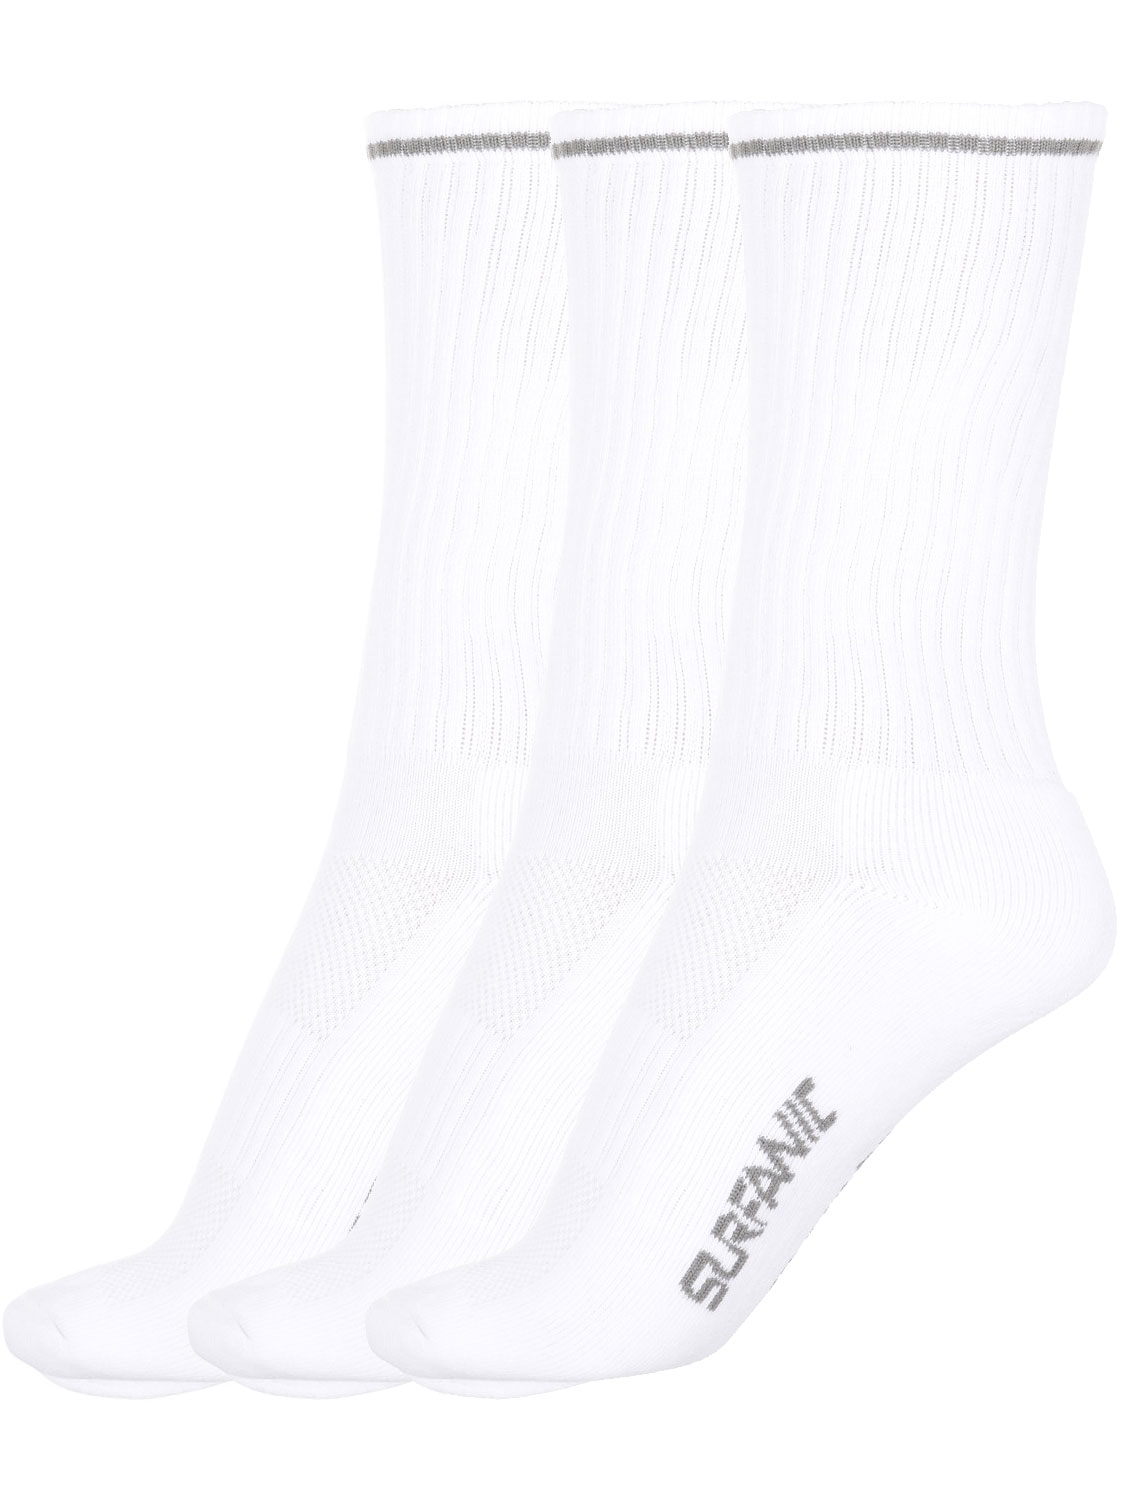 Surfanic Mens Aerotec Sport Ankle Sock 3pk White - Size: 7-11